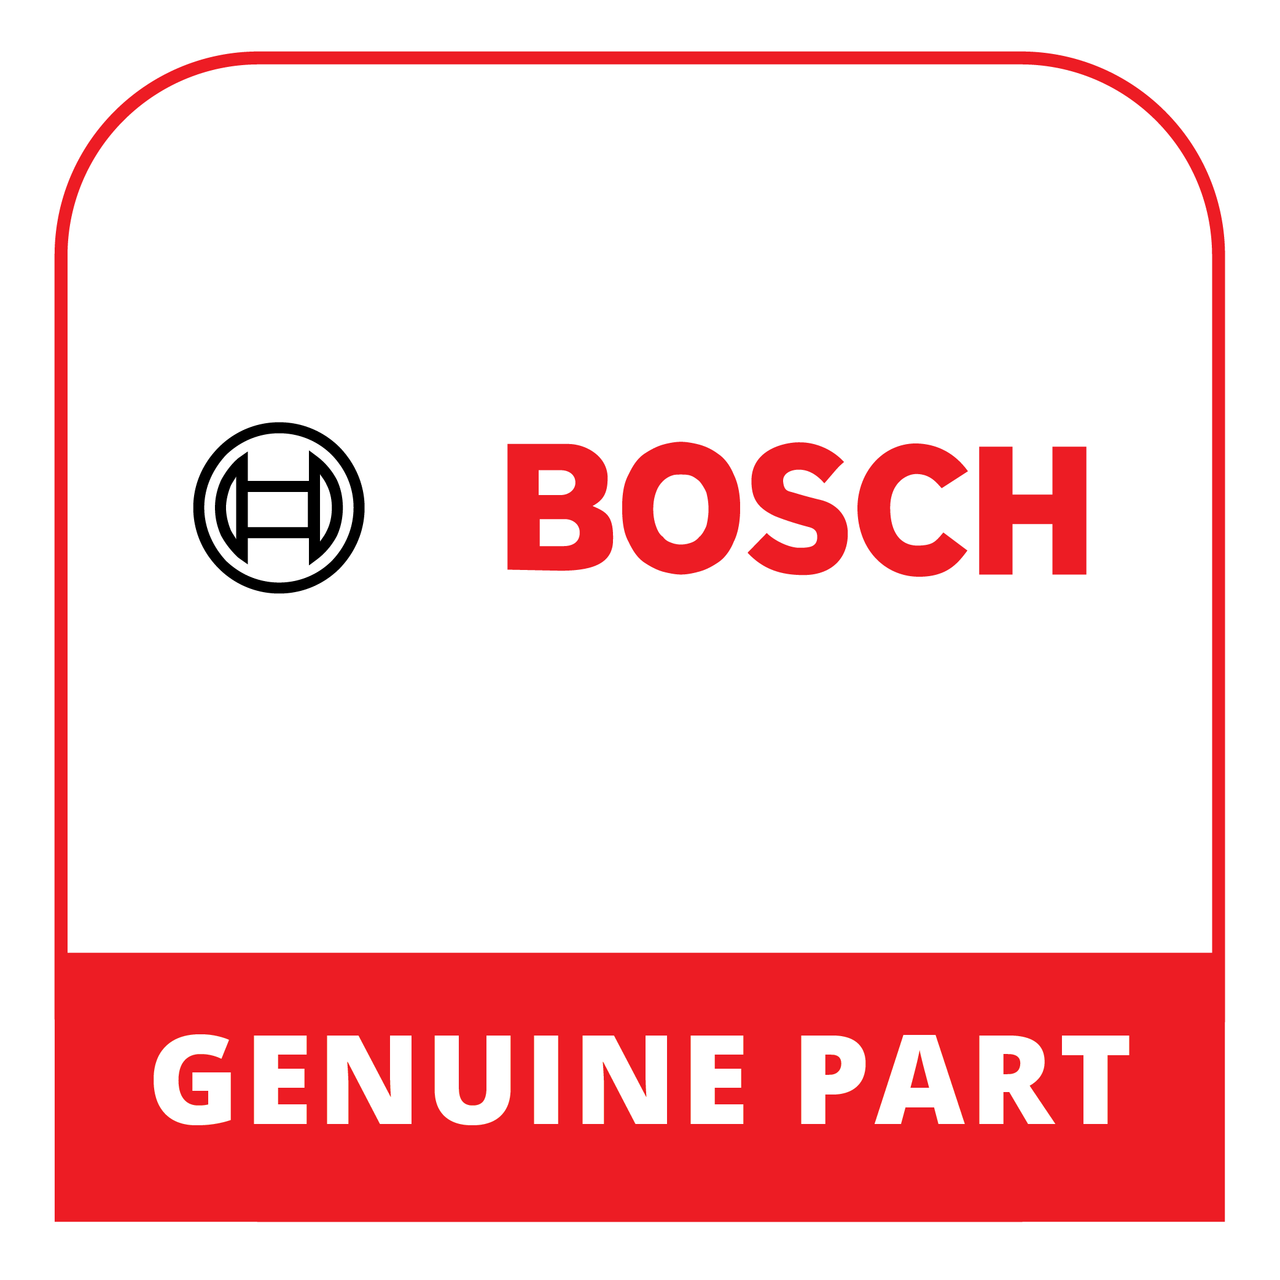 Bosch (Thermador) 20001878 - Case-Bottom - Genuine Bosch (Thermador) Part